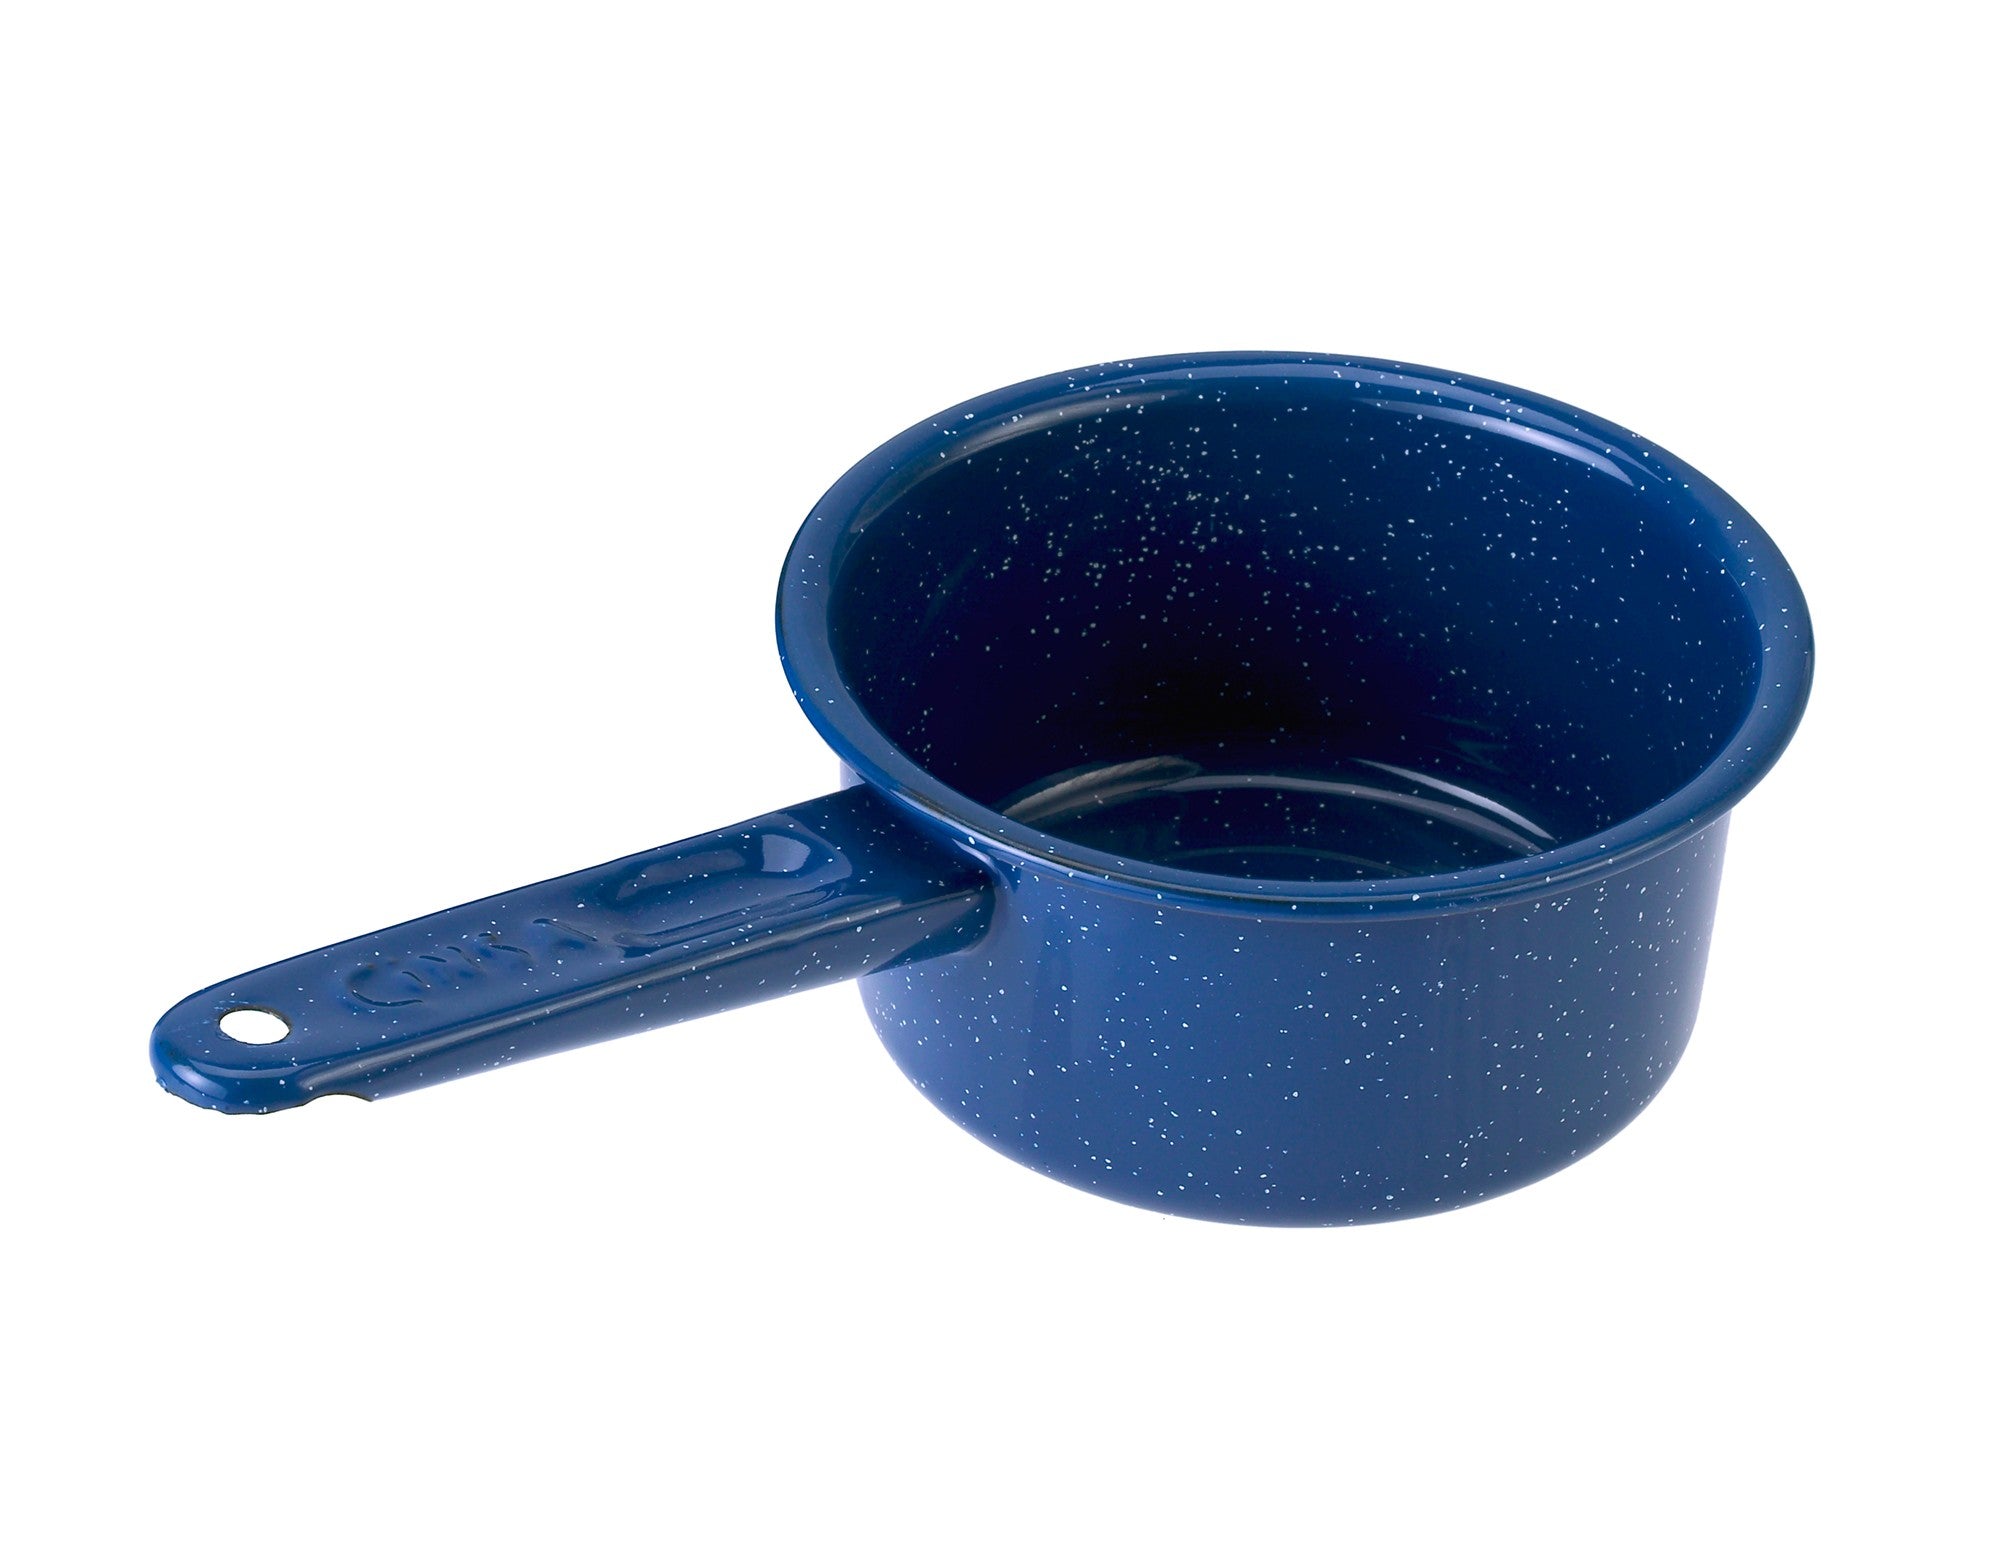 Blue Enamel Stock Pot Retro Enamelware Pot Enamel Pot 